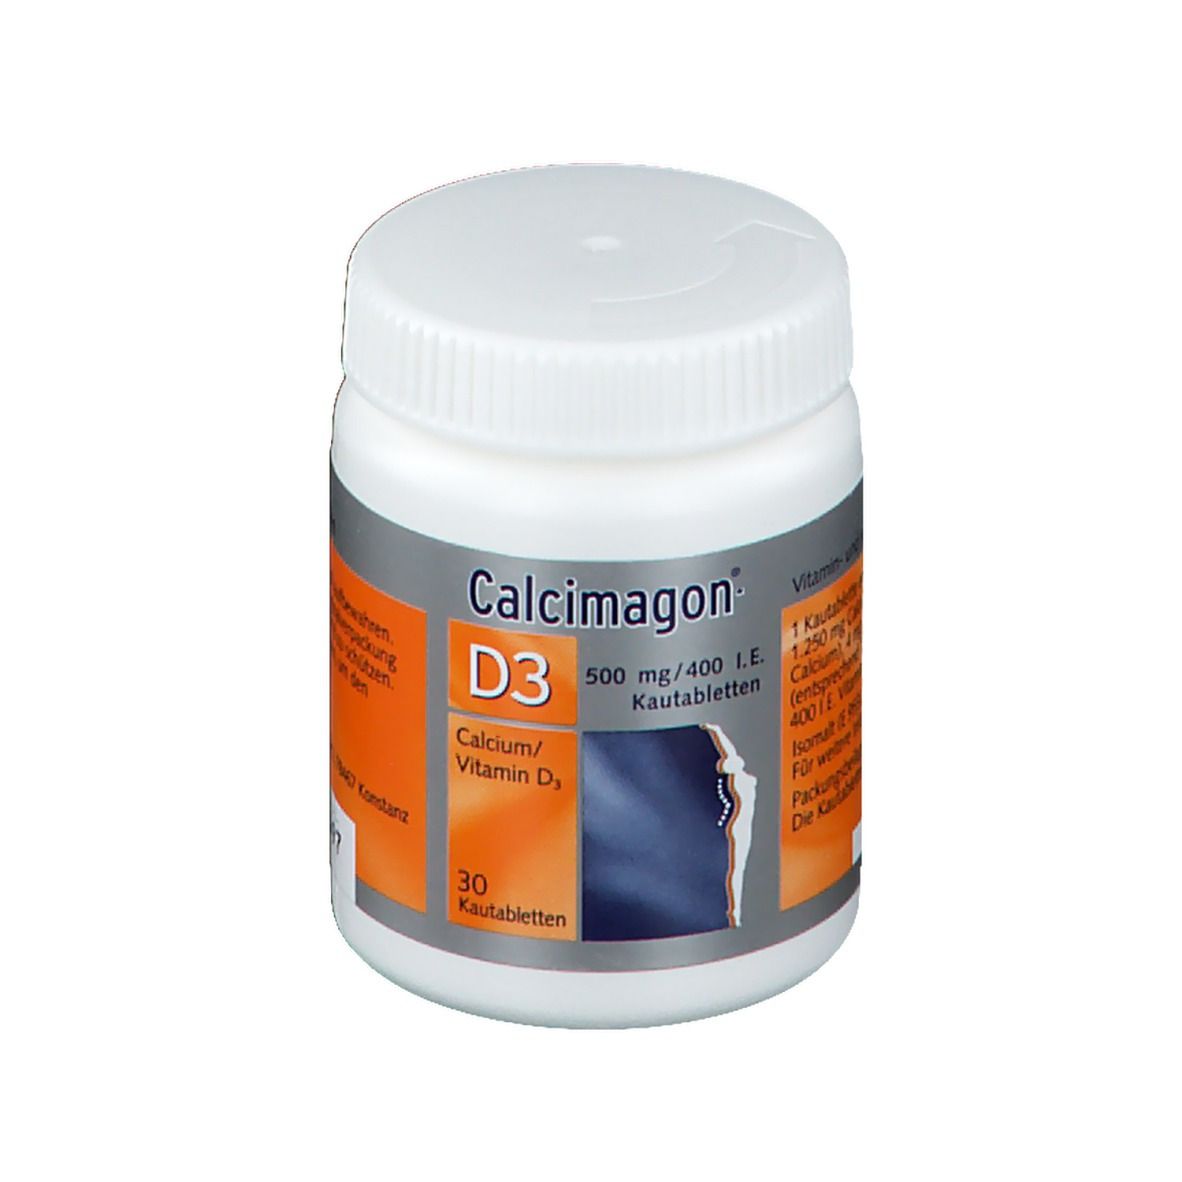 Calcimagon®-D3 500 mg/ 400 I.E. Kautabletten